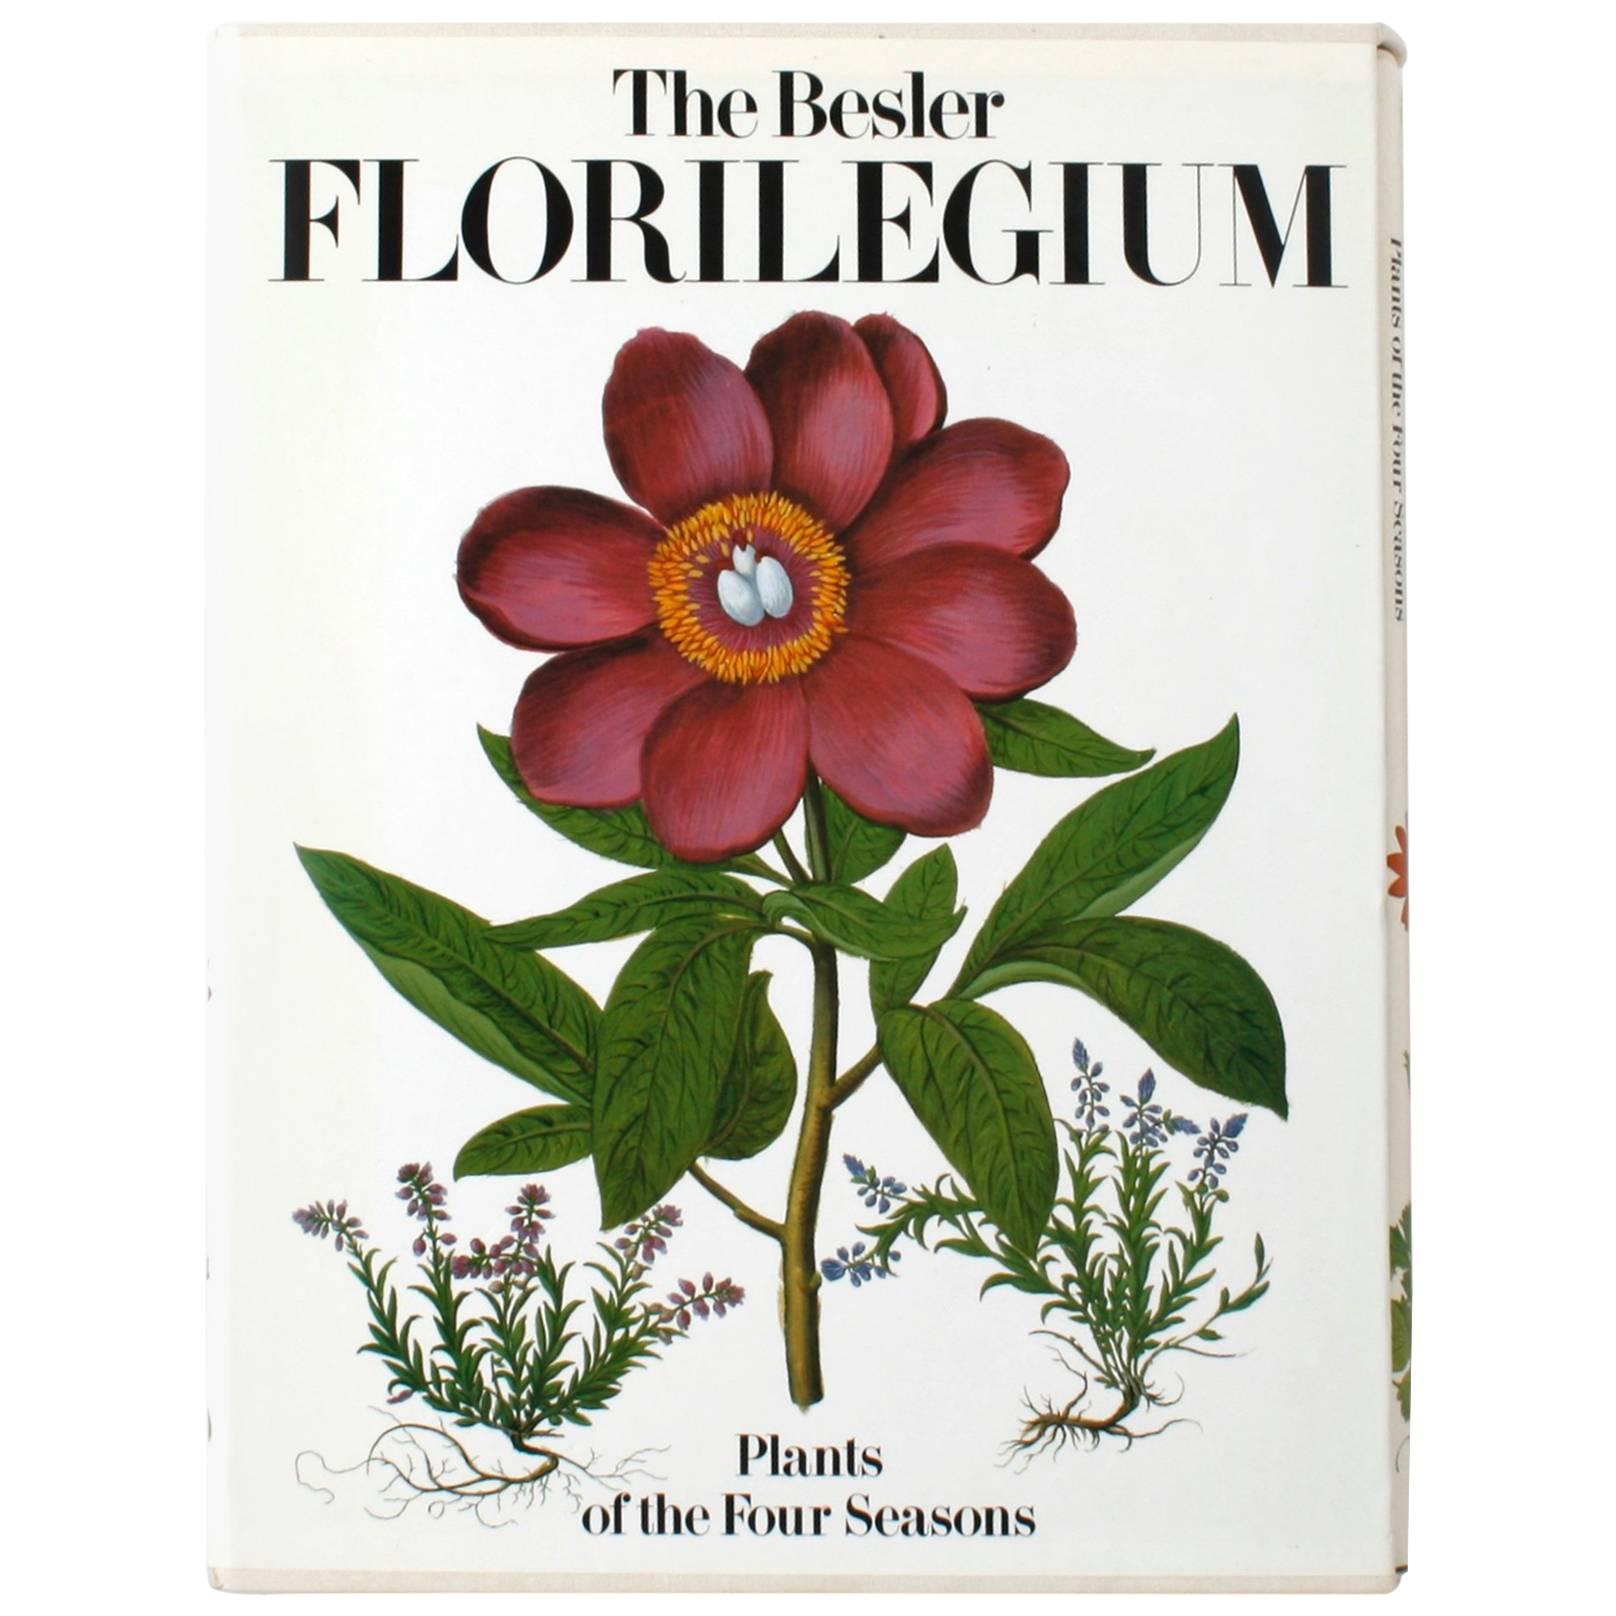 The Besler Florilegium: Plants of the Four Seasons, 1st Ed Thus